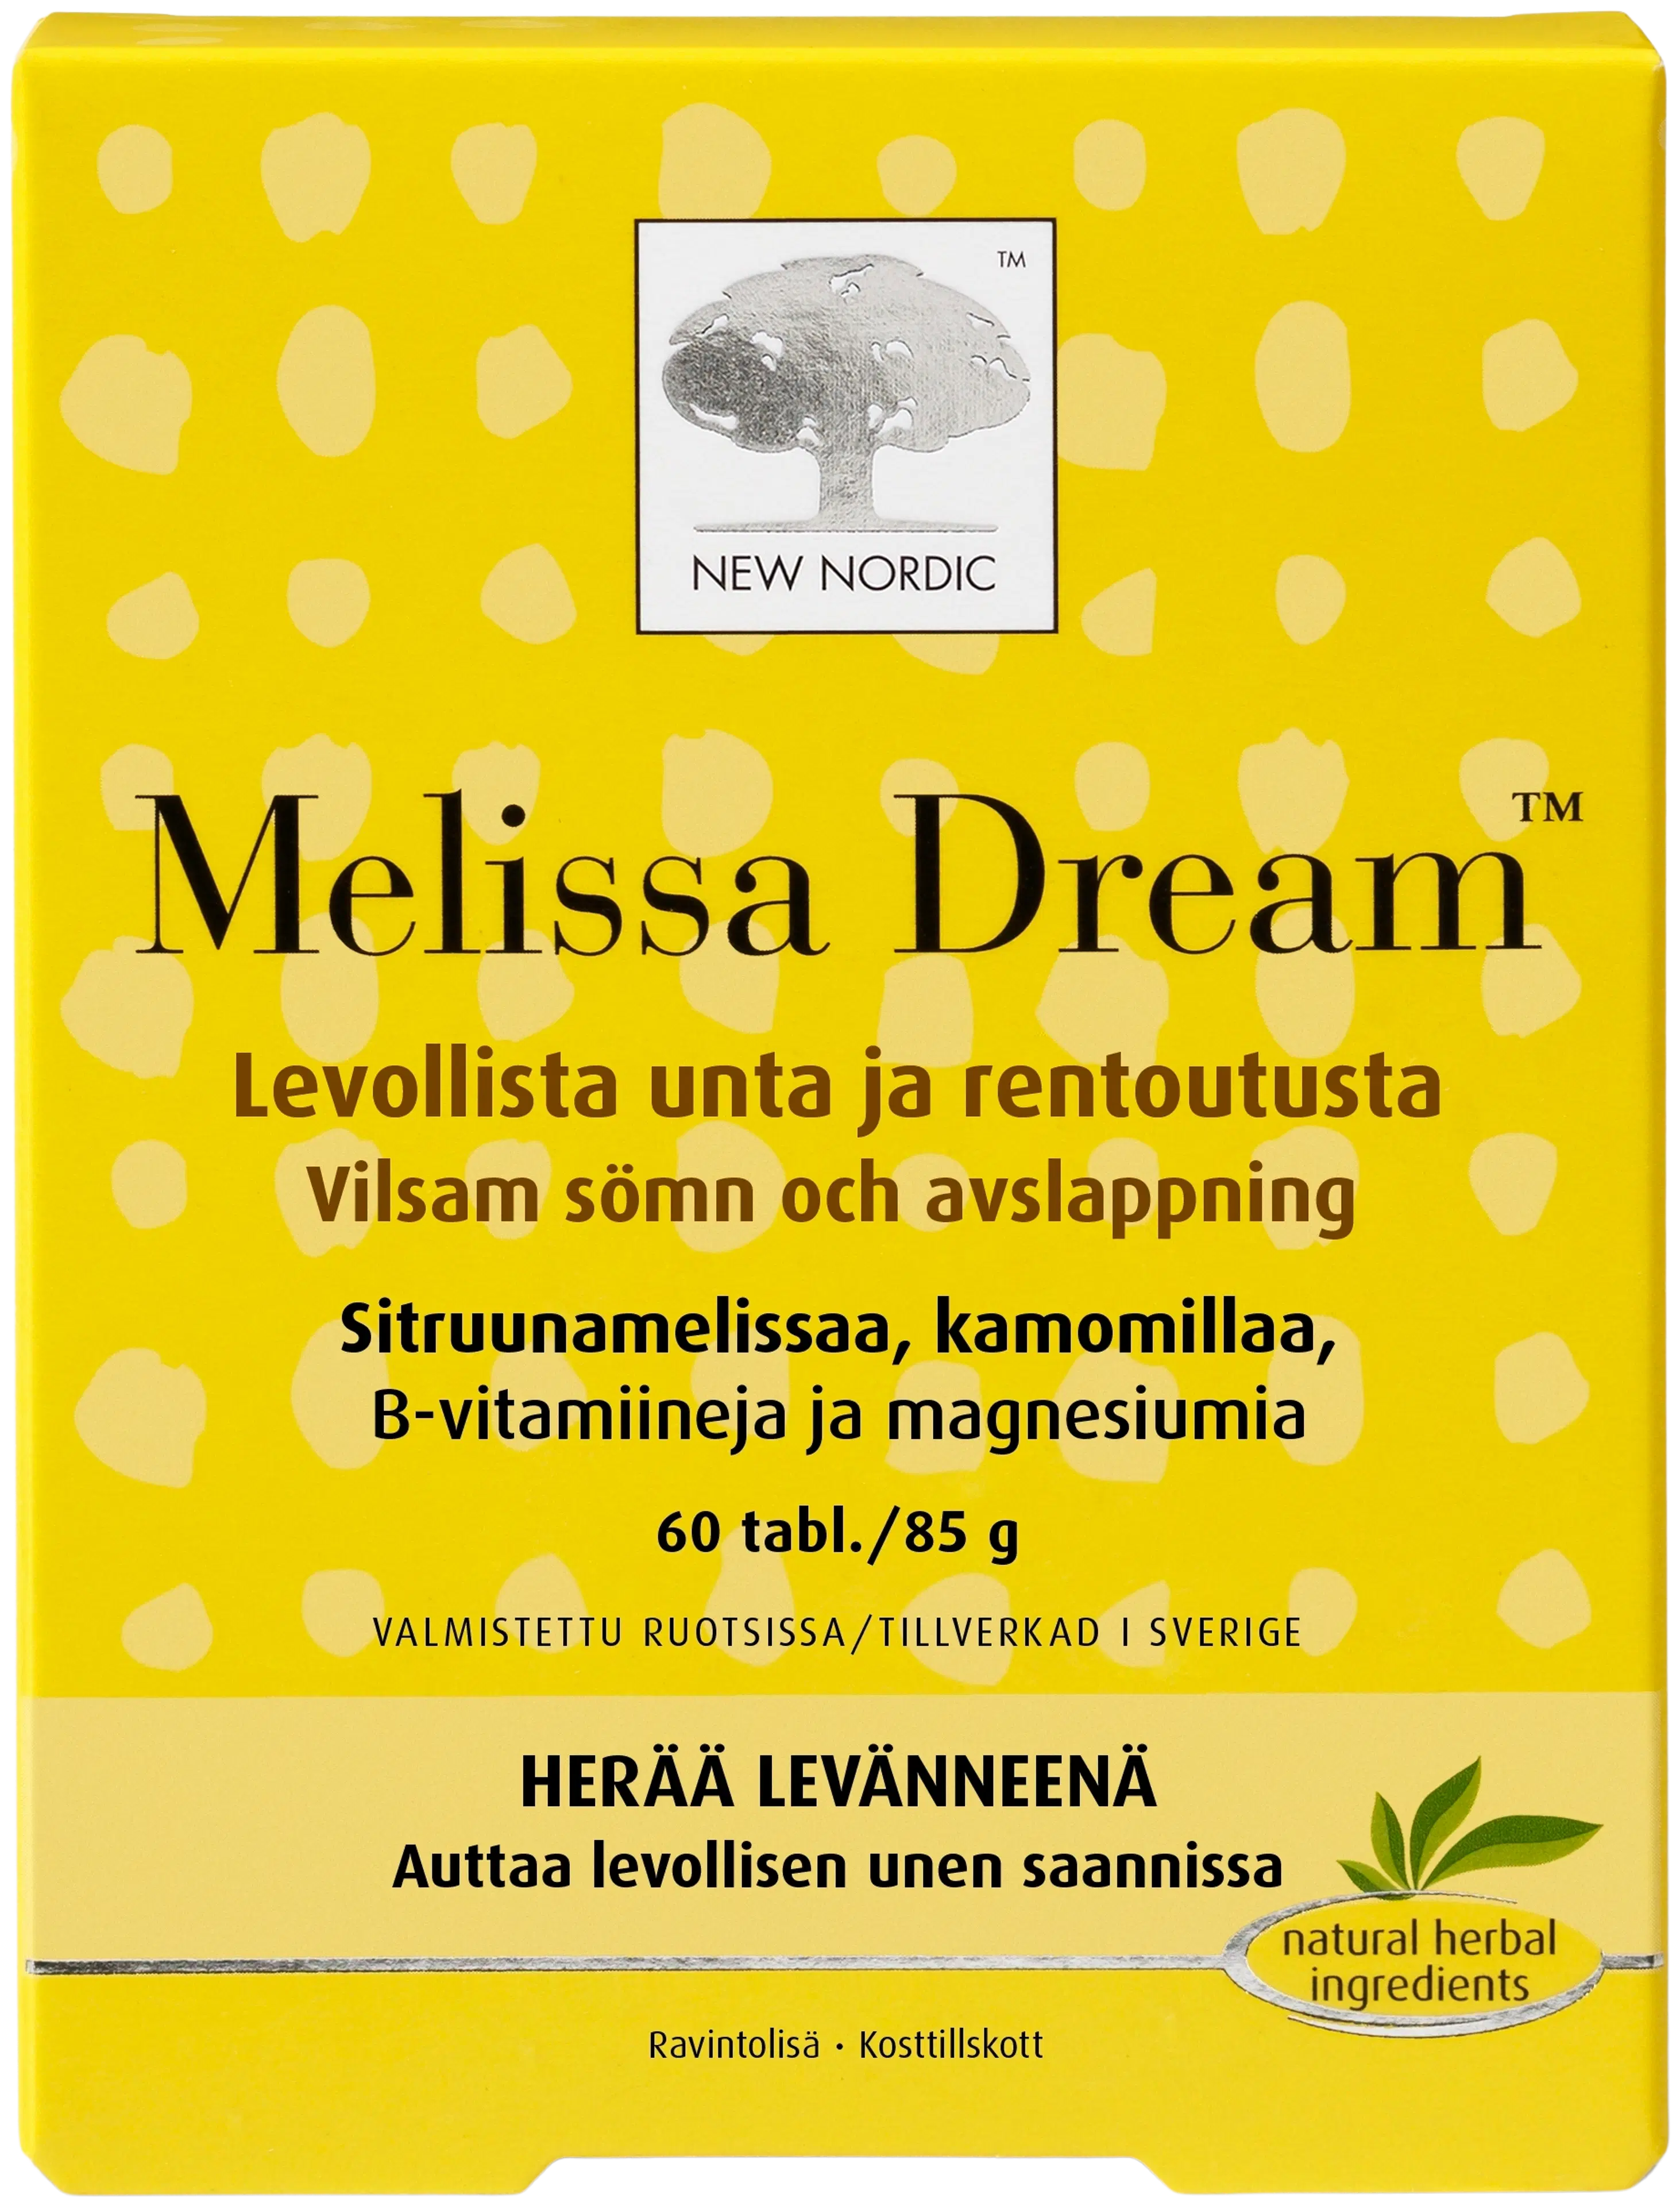 New Nordic Melissa Dream™ravintolisä 60 tabl.